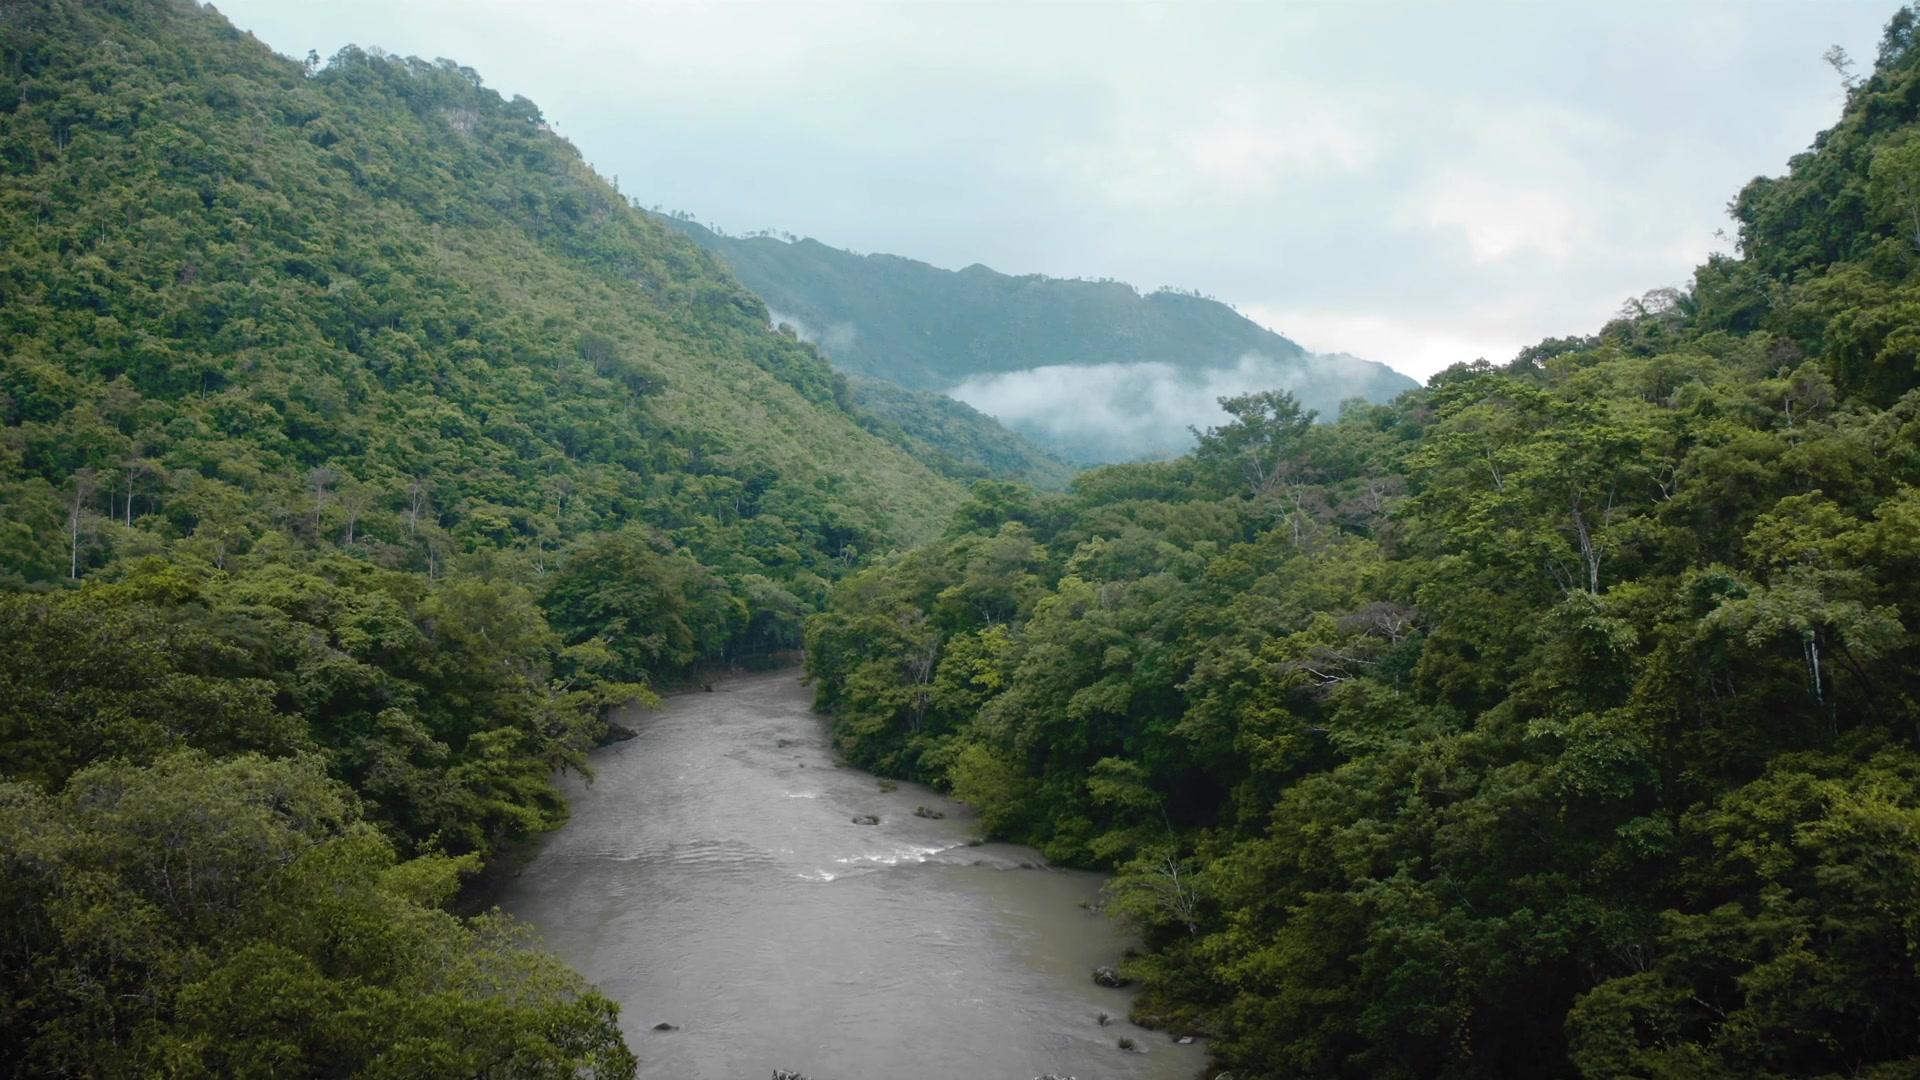 Guatemala: Heart of the Mayan World (2019)